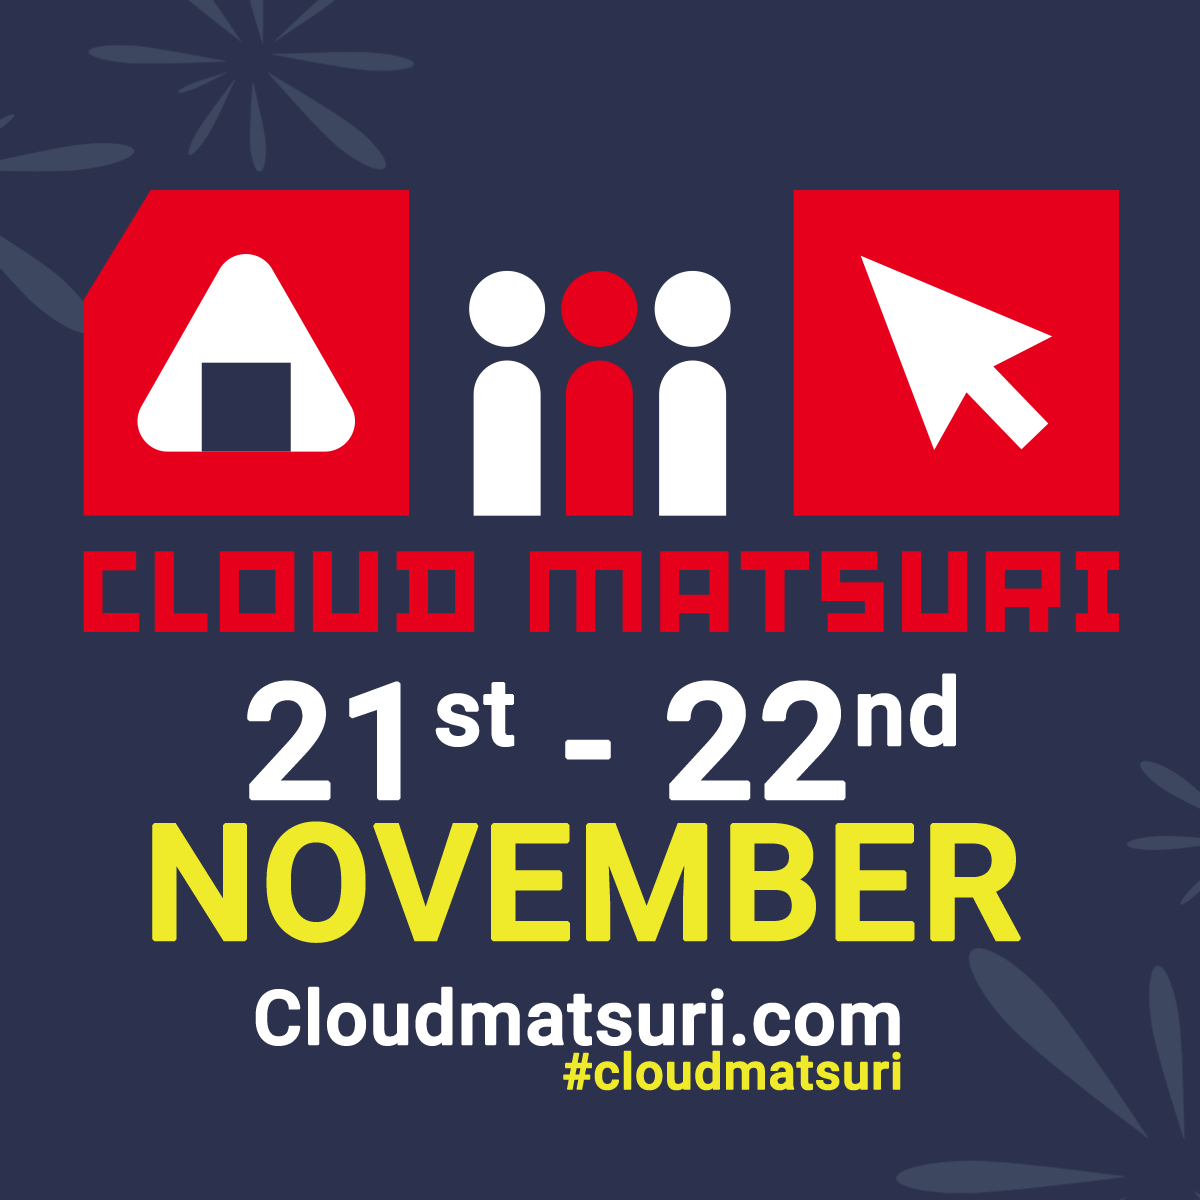 5 Reasons to join us at Cloud Matsuri this weekend